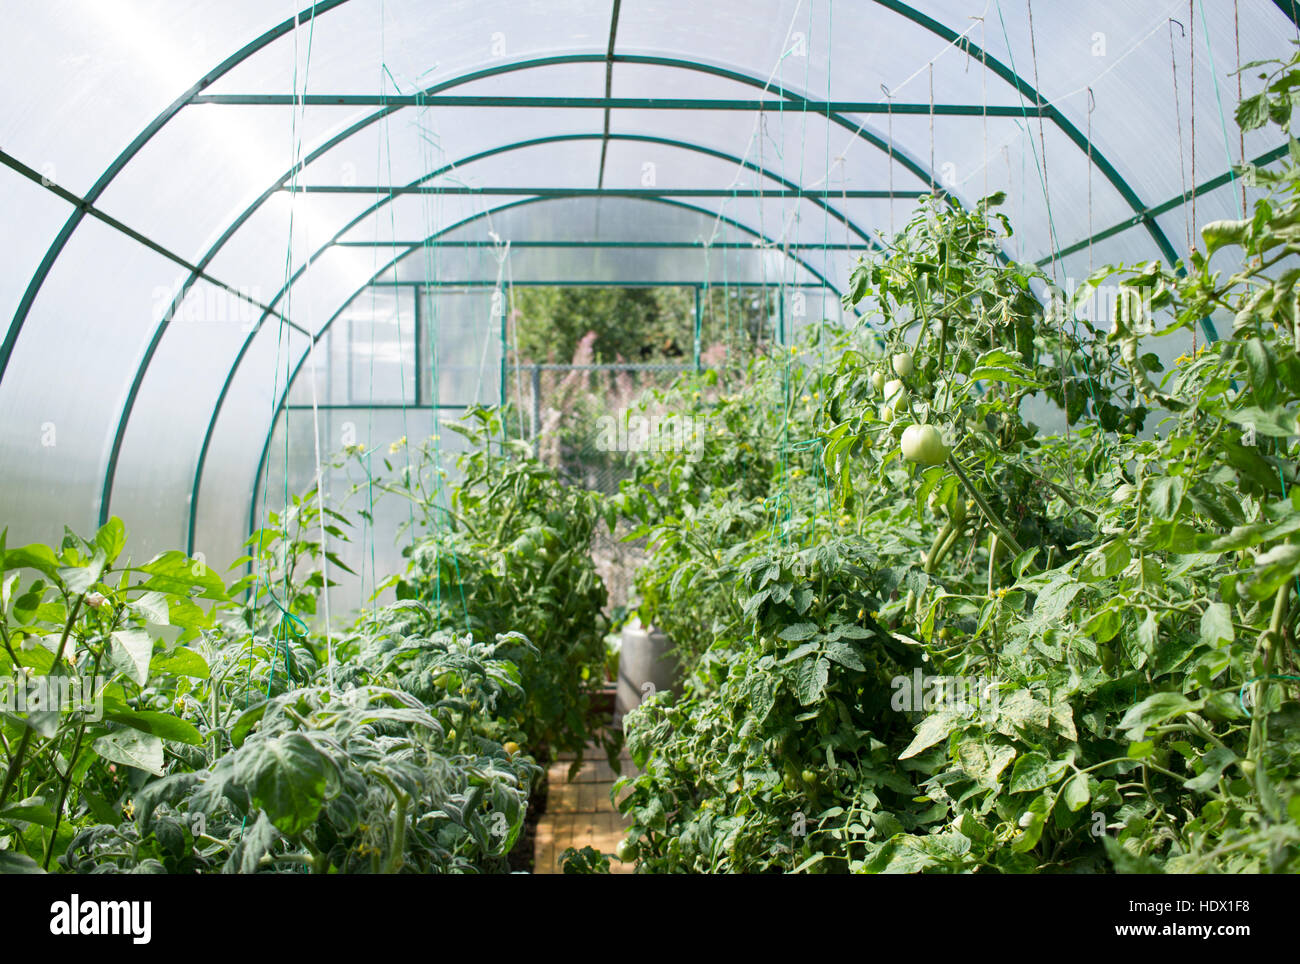 Vegetable garden in greenhouse Stock Photo